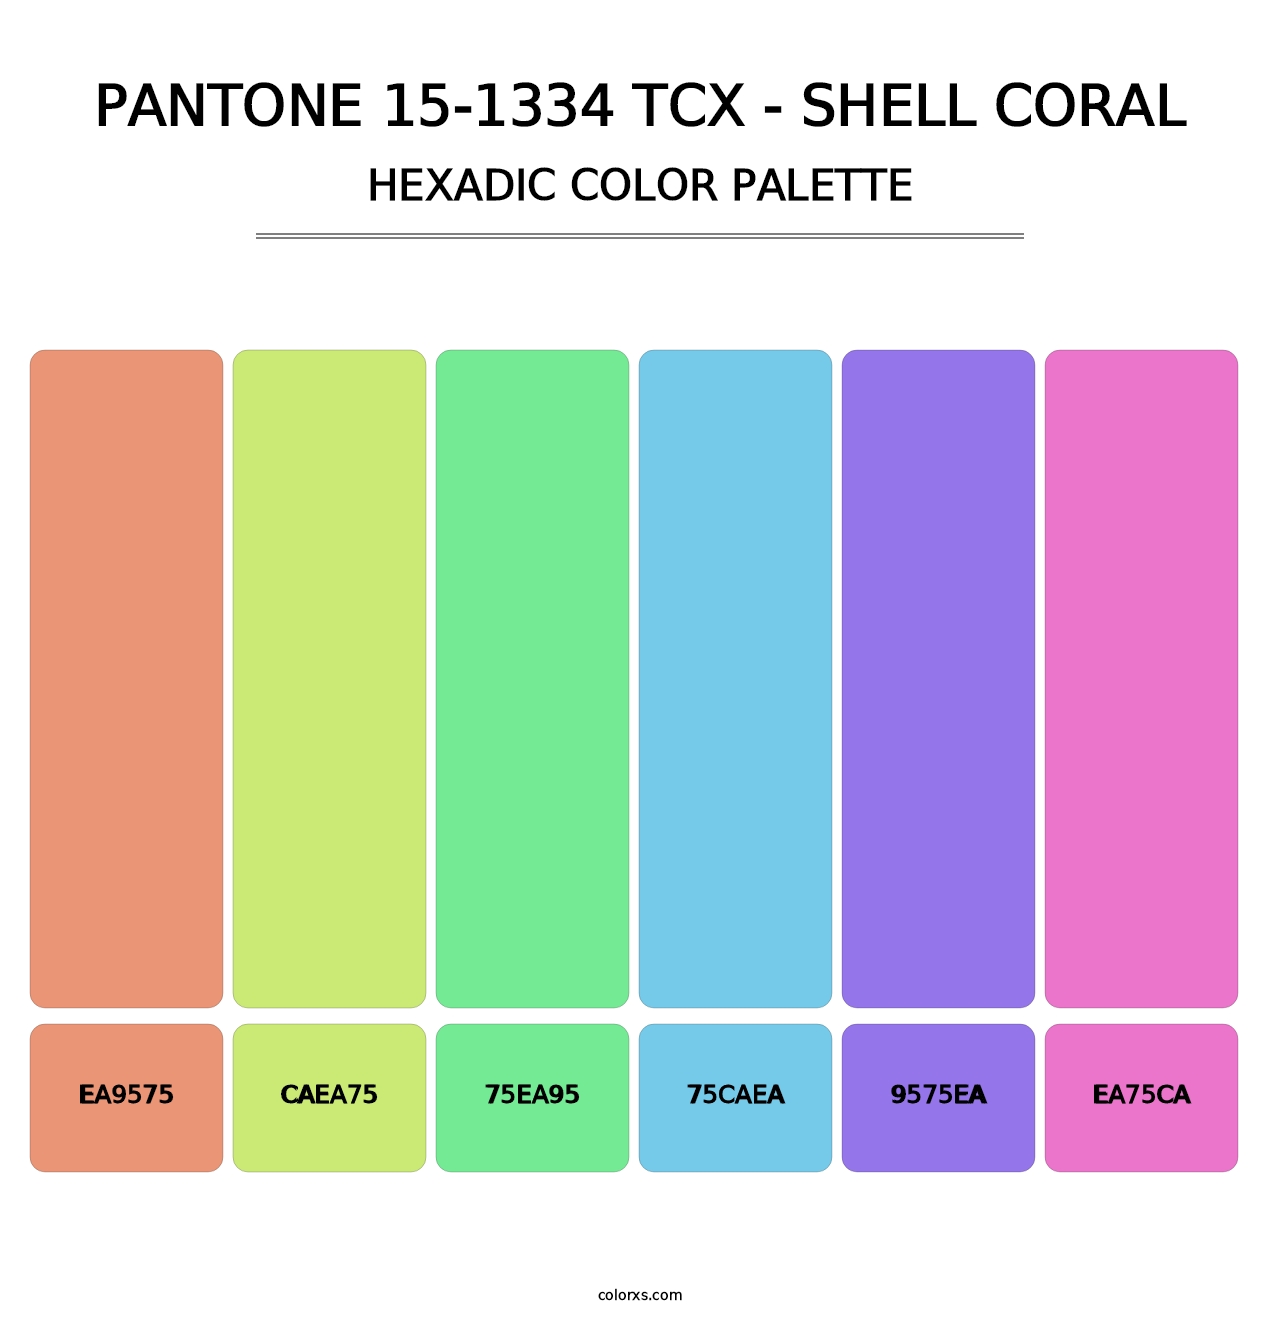 PANTONE 15-1334 TCX - Shell Coral - Hexadic Color Palette